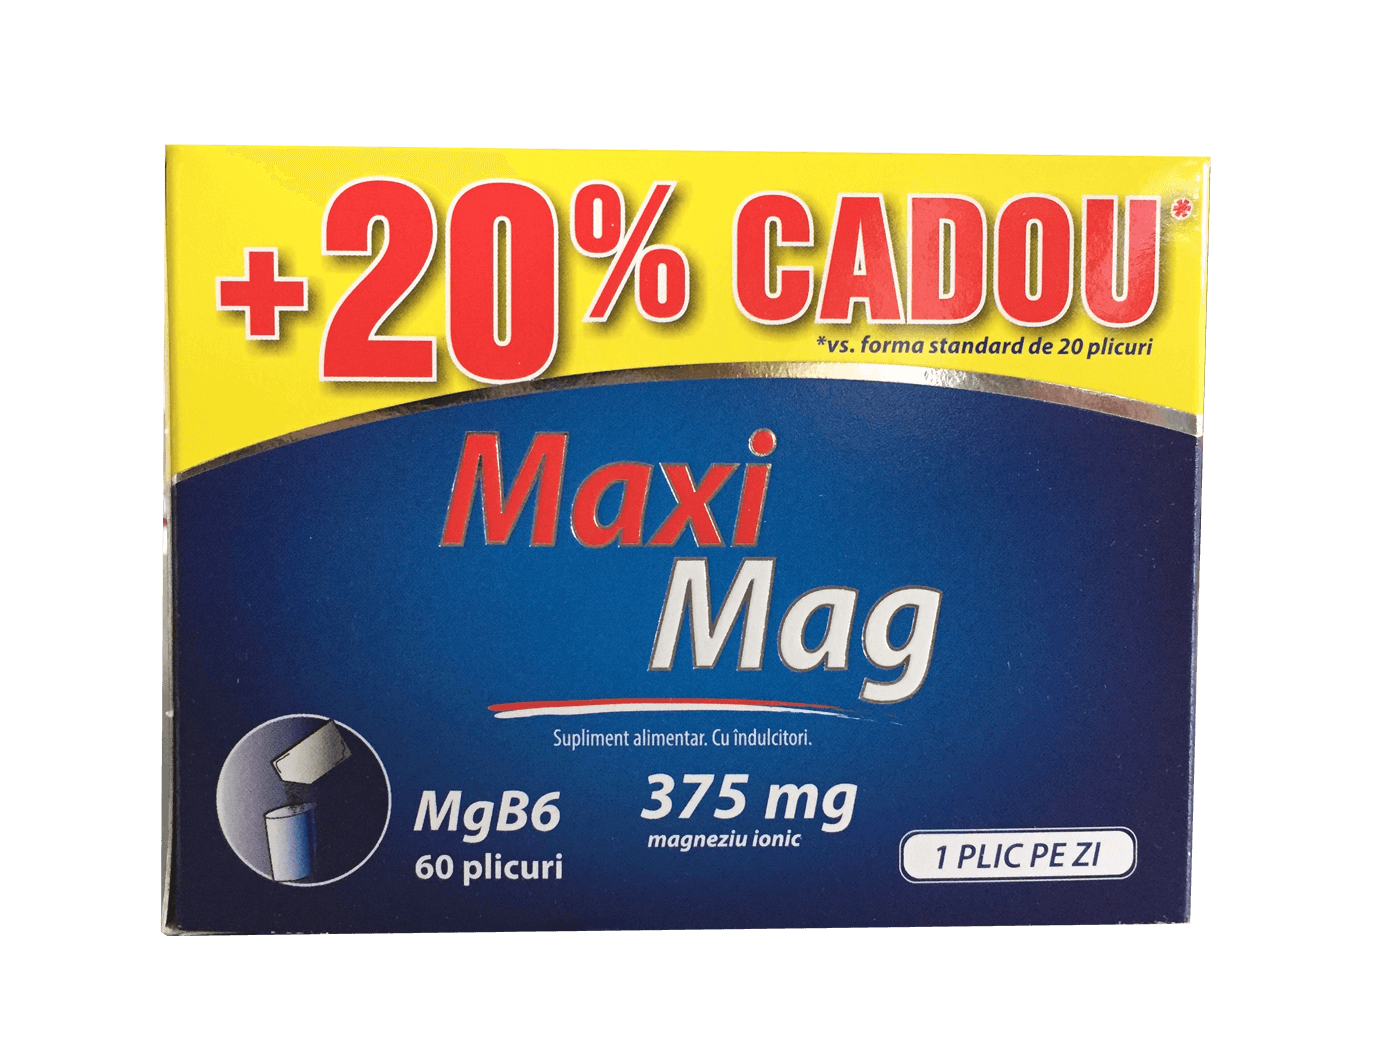 Stres si oboseala - MaxiMag, 375 mg magneziu ionic, 60 plicuri, Zdrovit
, nordpharm.ro